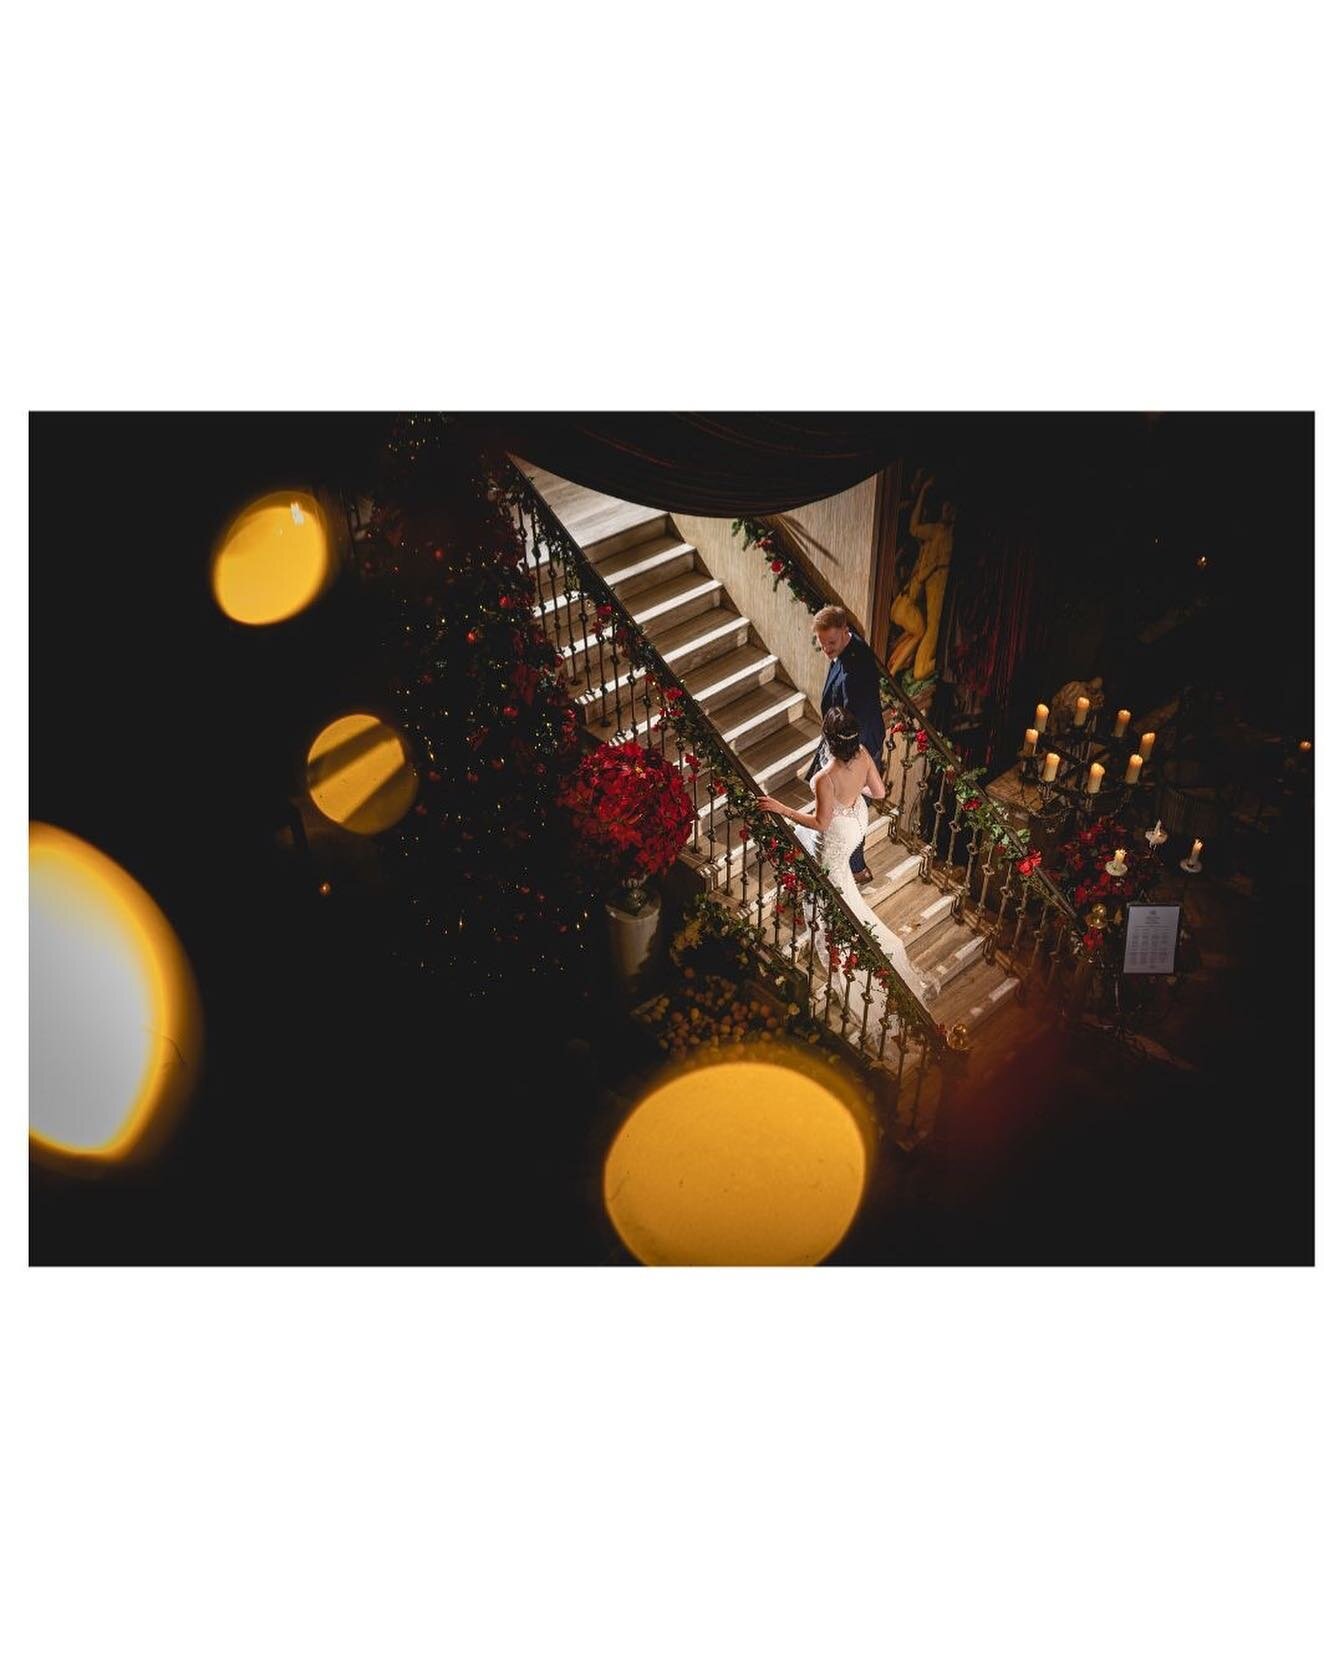 💛 Currently working on this fab couples final edit! @fiona.garden.85 @artaglasgow 

#scottish #scottishwedding #scottishweddingphotographer #arta #artaglasgowwedding #artaglasgow #glasgowweddingphotographer #scottishweddingvenue #wow #weddingportrai